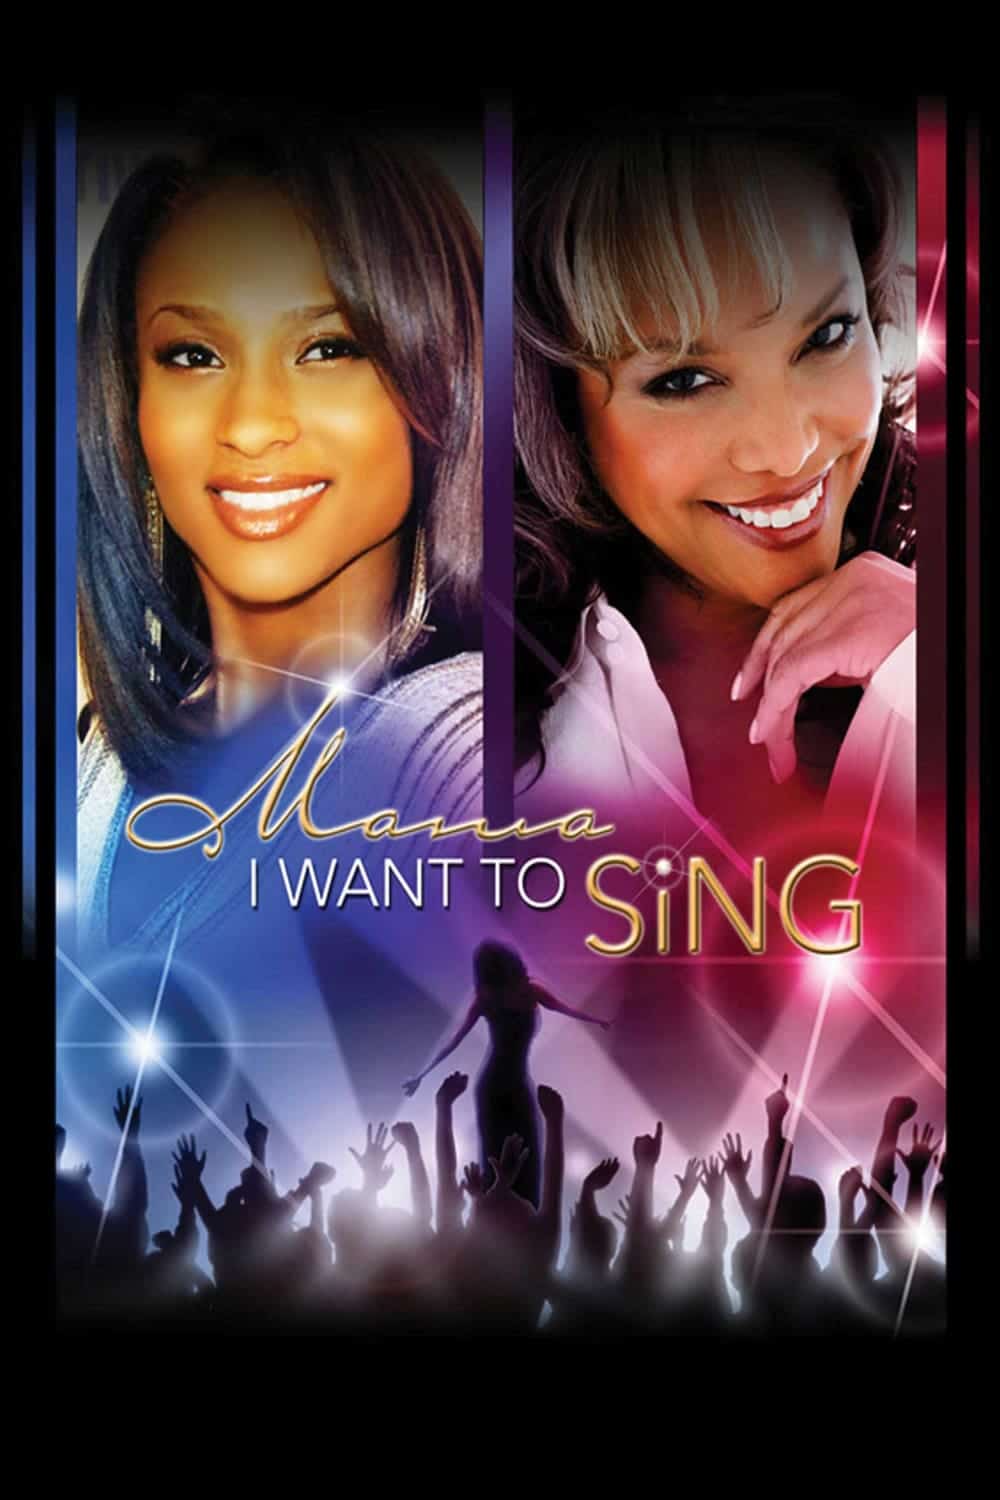 Plakat von "Mama, I Want to Sing!"